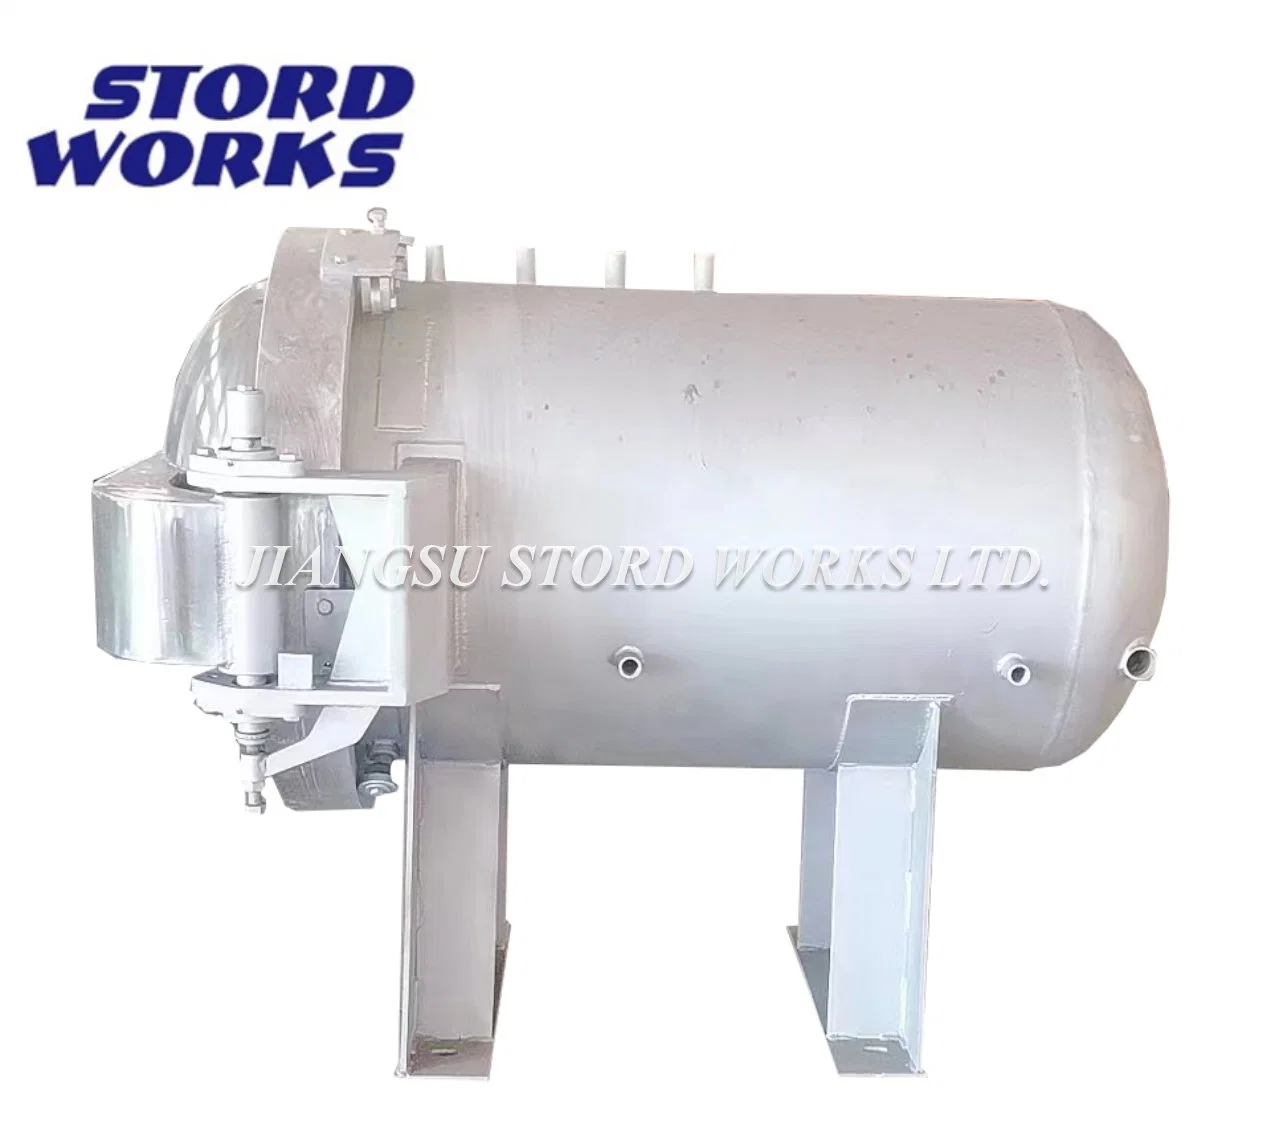 Stordworks High Pressure Vessel Storage Tank Ss for Water